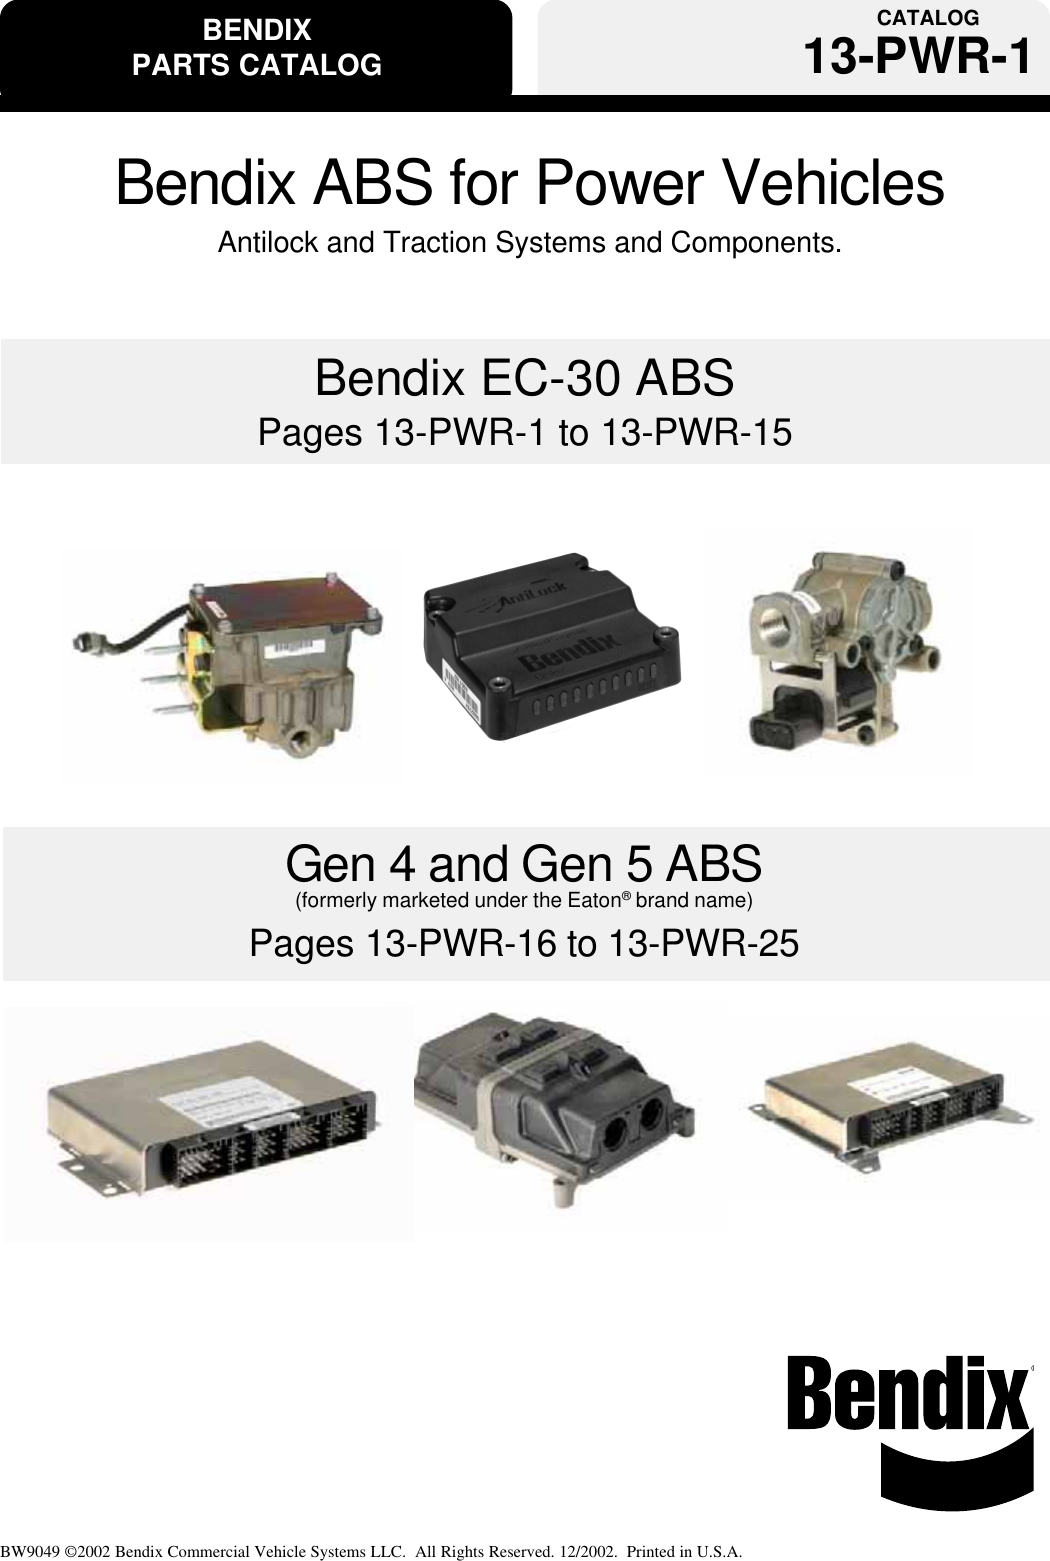 components of bendix abs 6